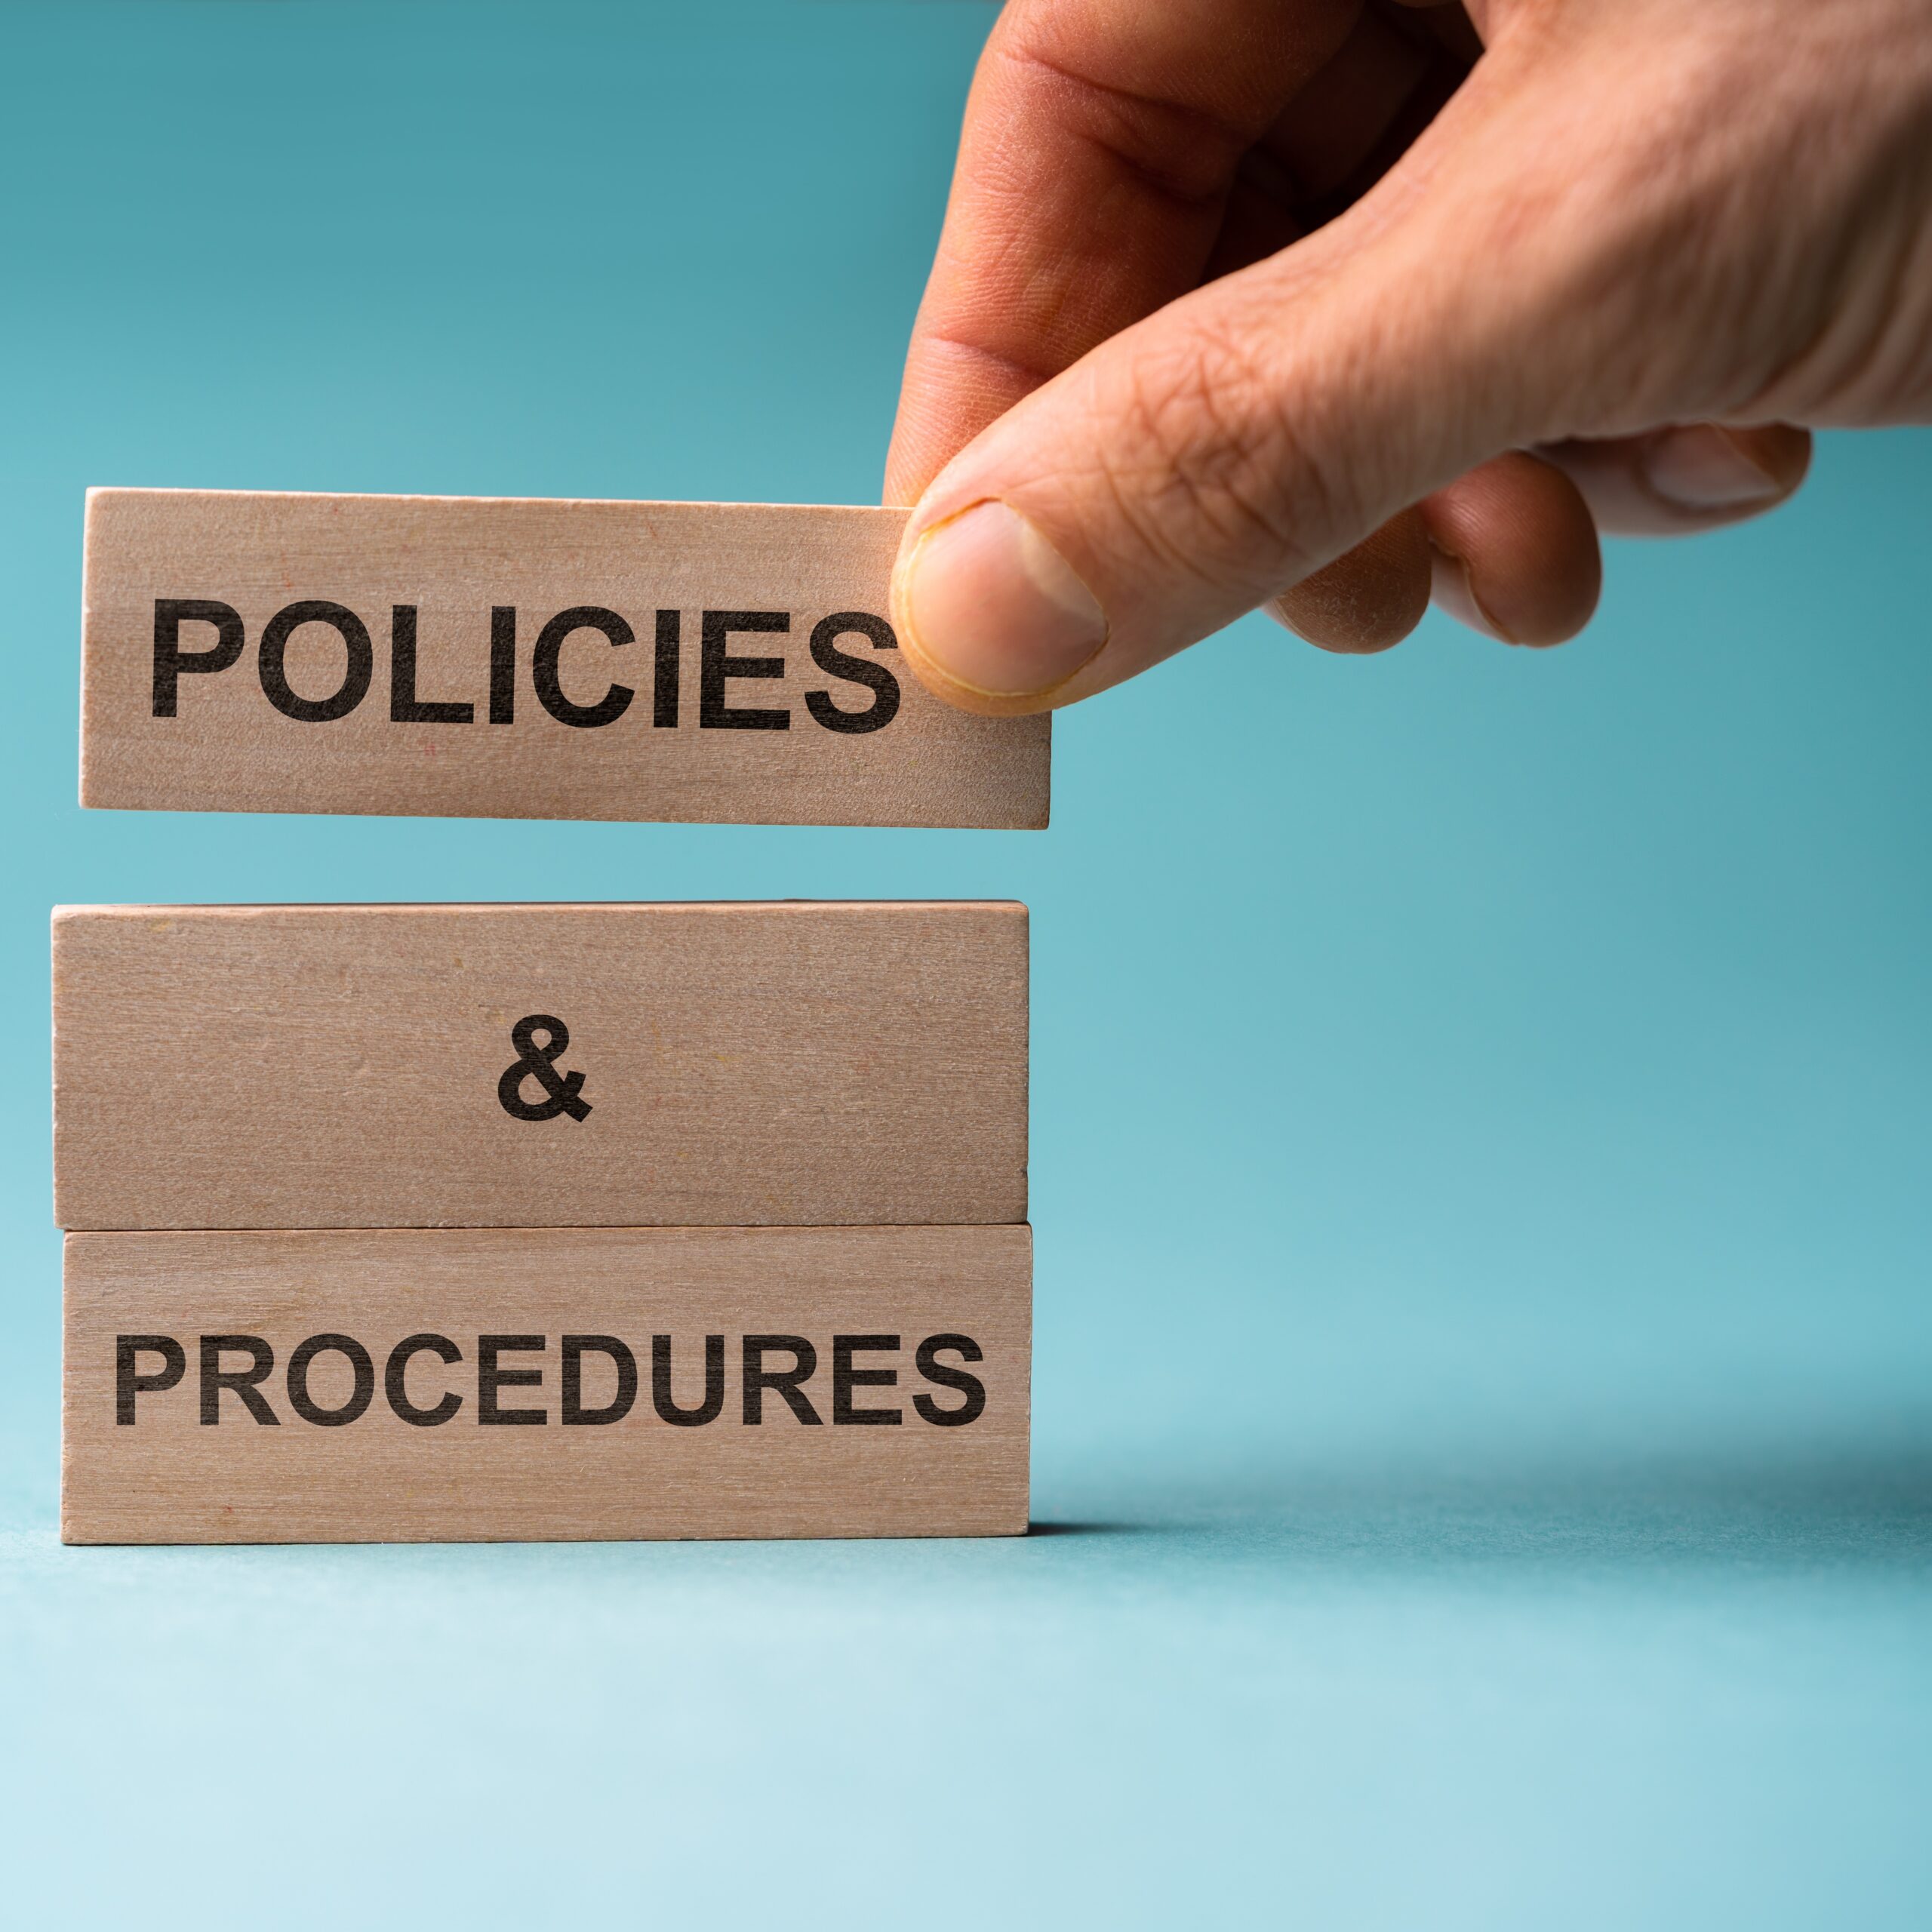 Policies. Procedures, and Complaint Form